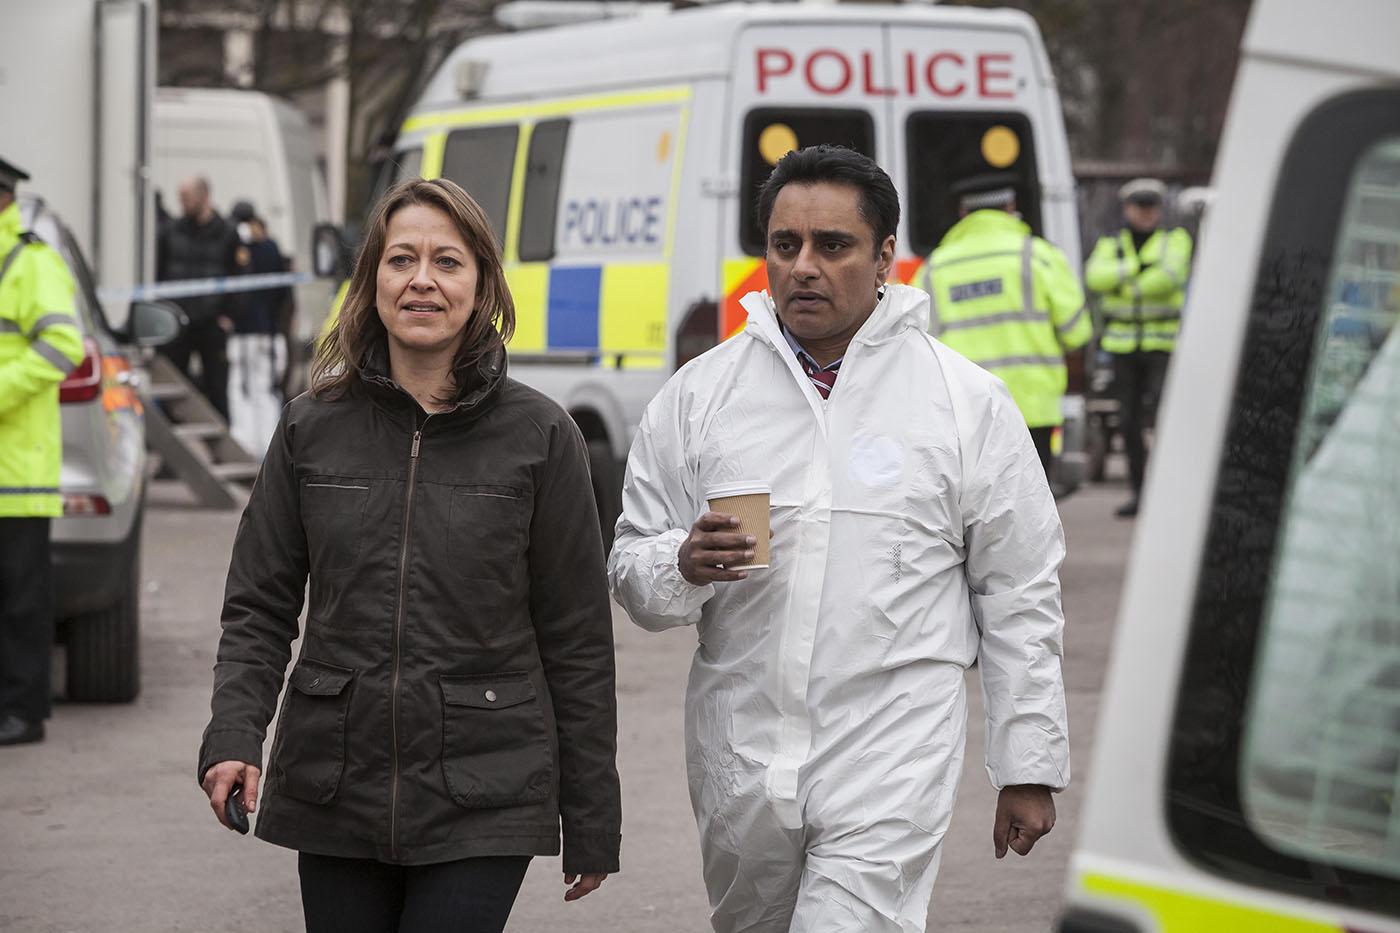 Cassie Stuart (Nicola Walker) and Sunny Khan (Sanjeev Bhaskar) in Unforgotten. Photo: John Rogers/Mainstreet Pictures